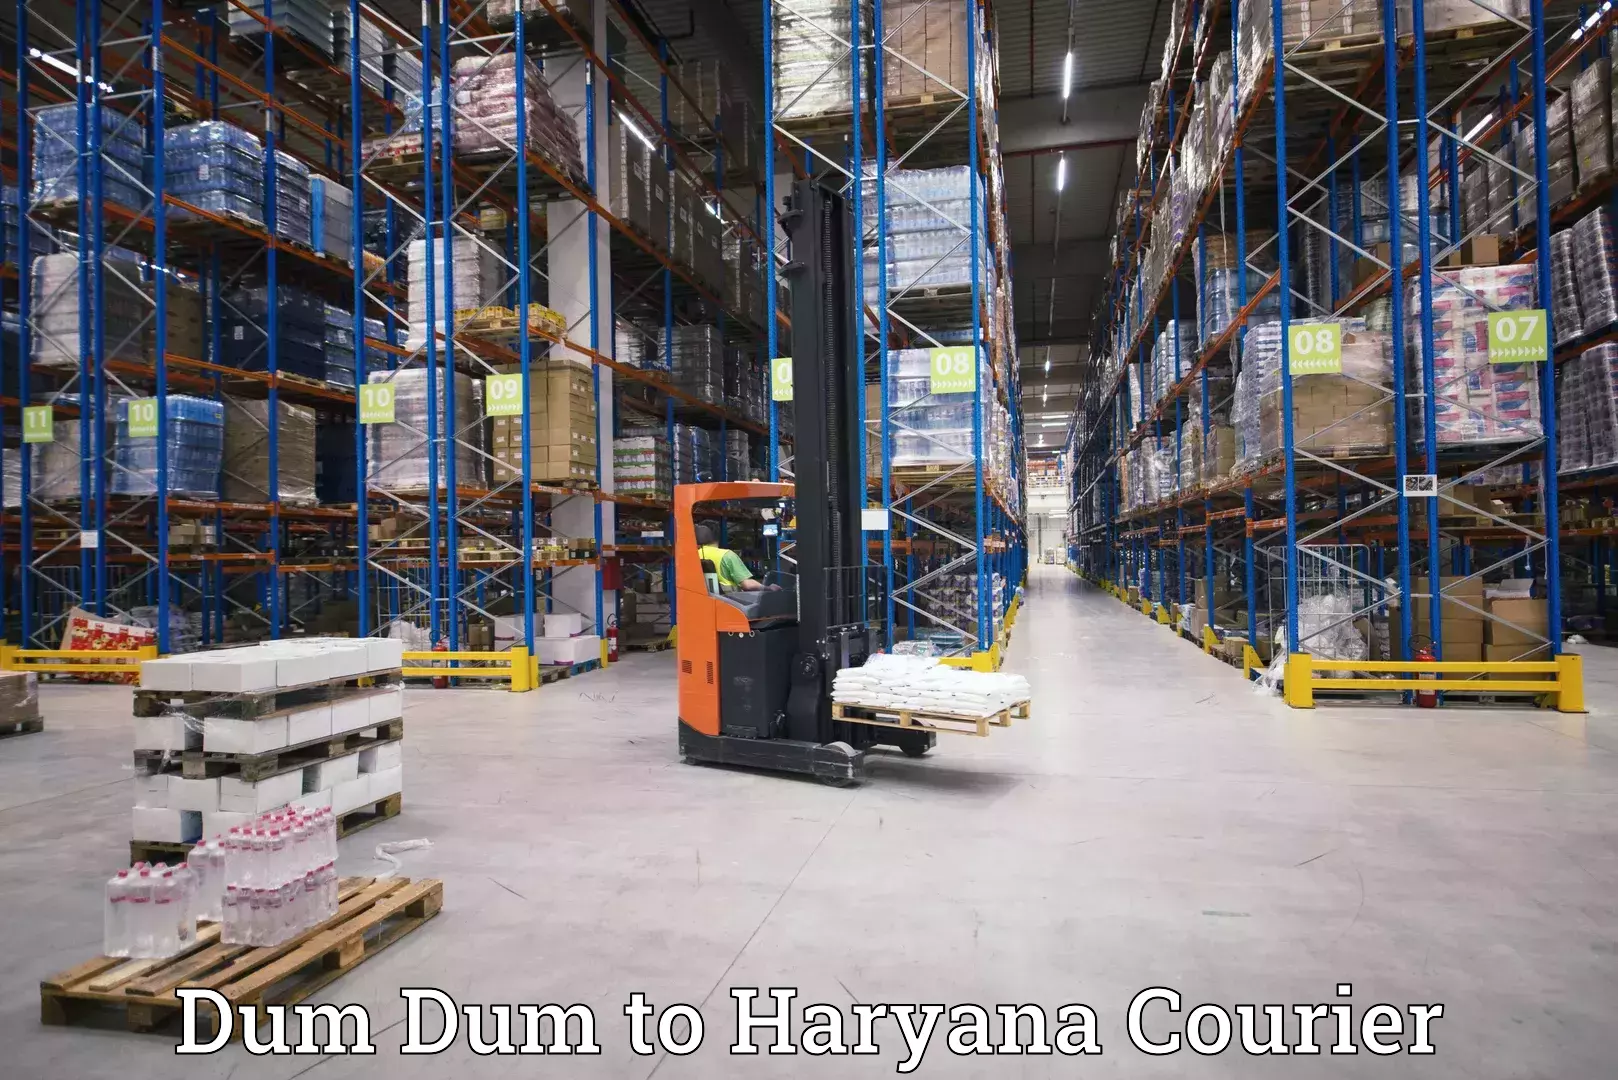 User-friendly courier app in Dum Dum to Haryana